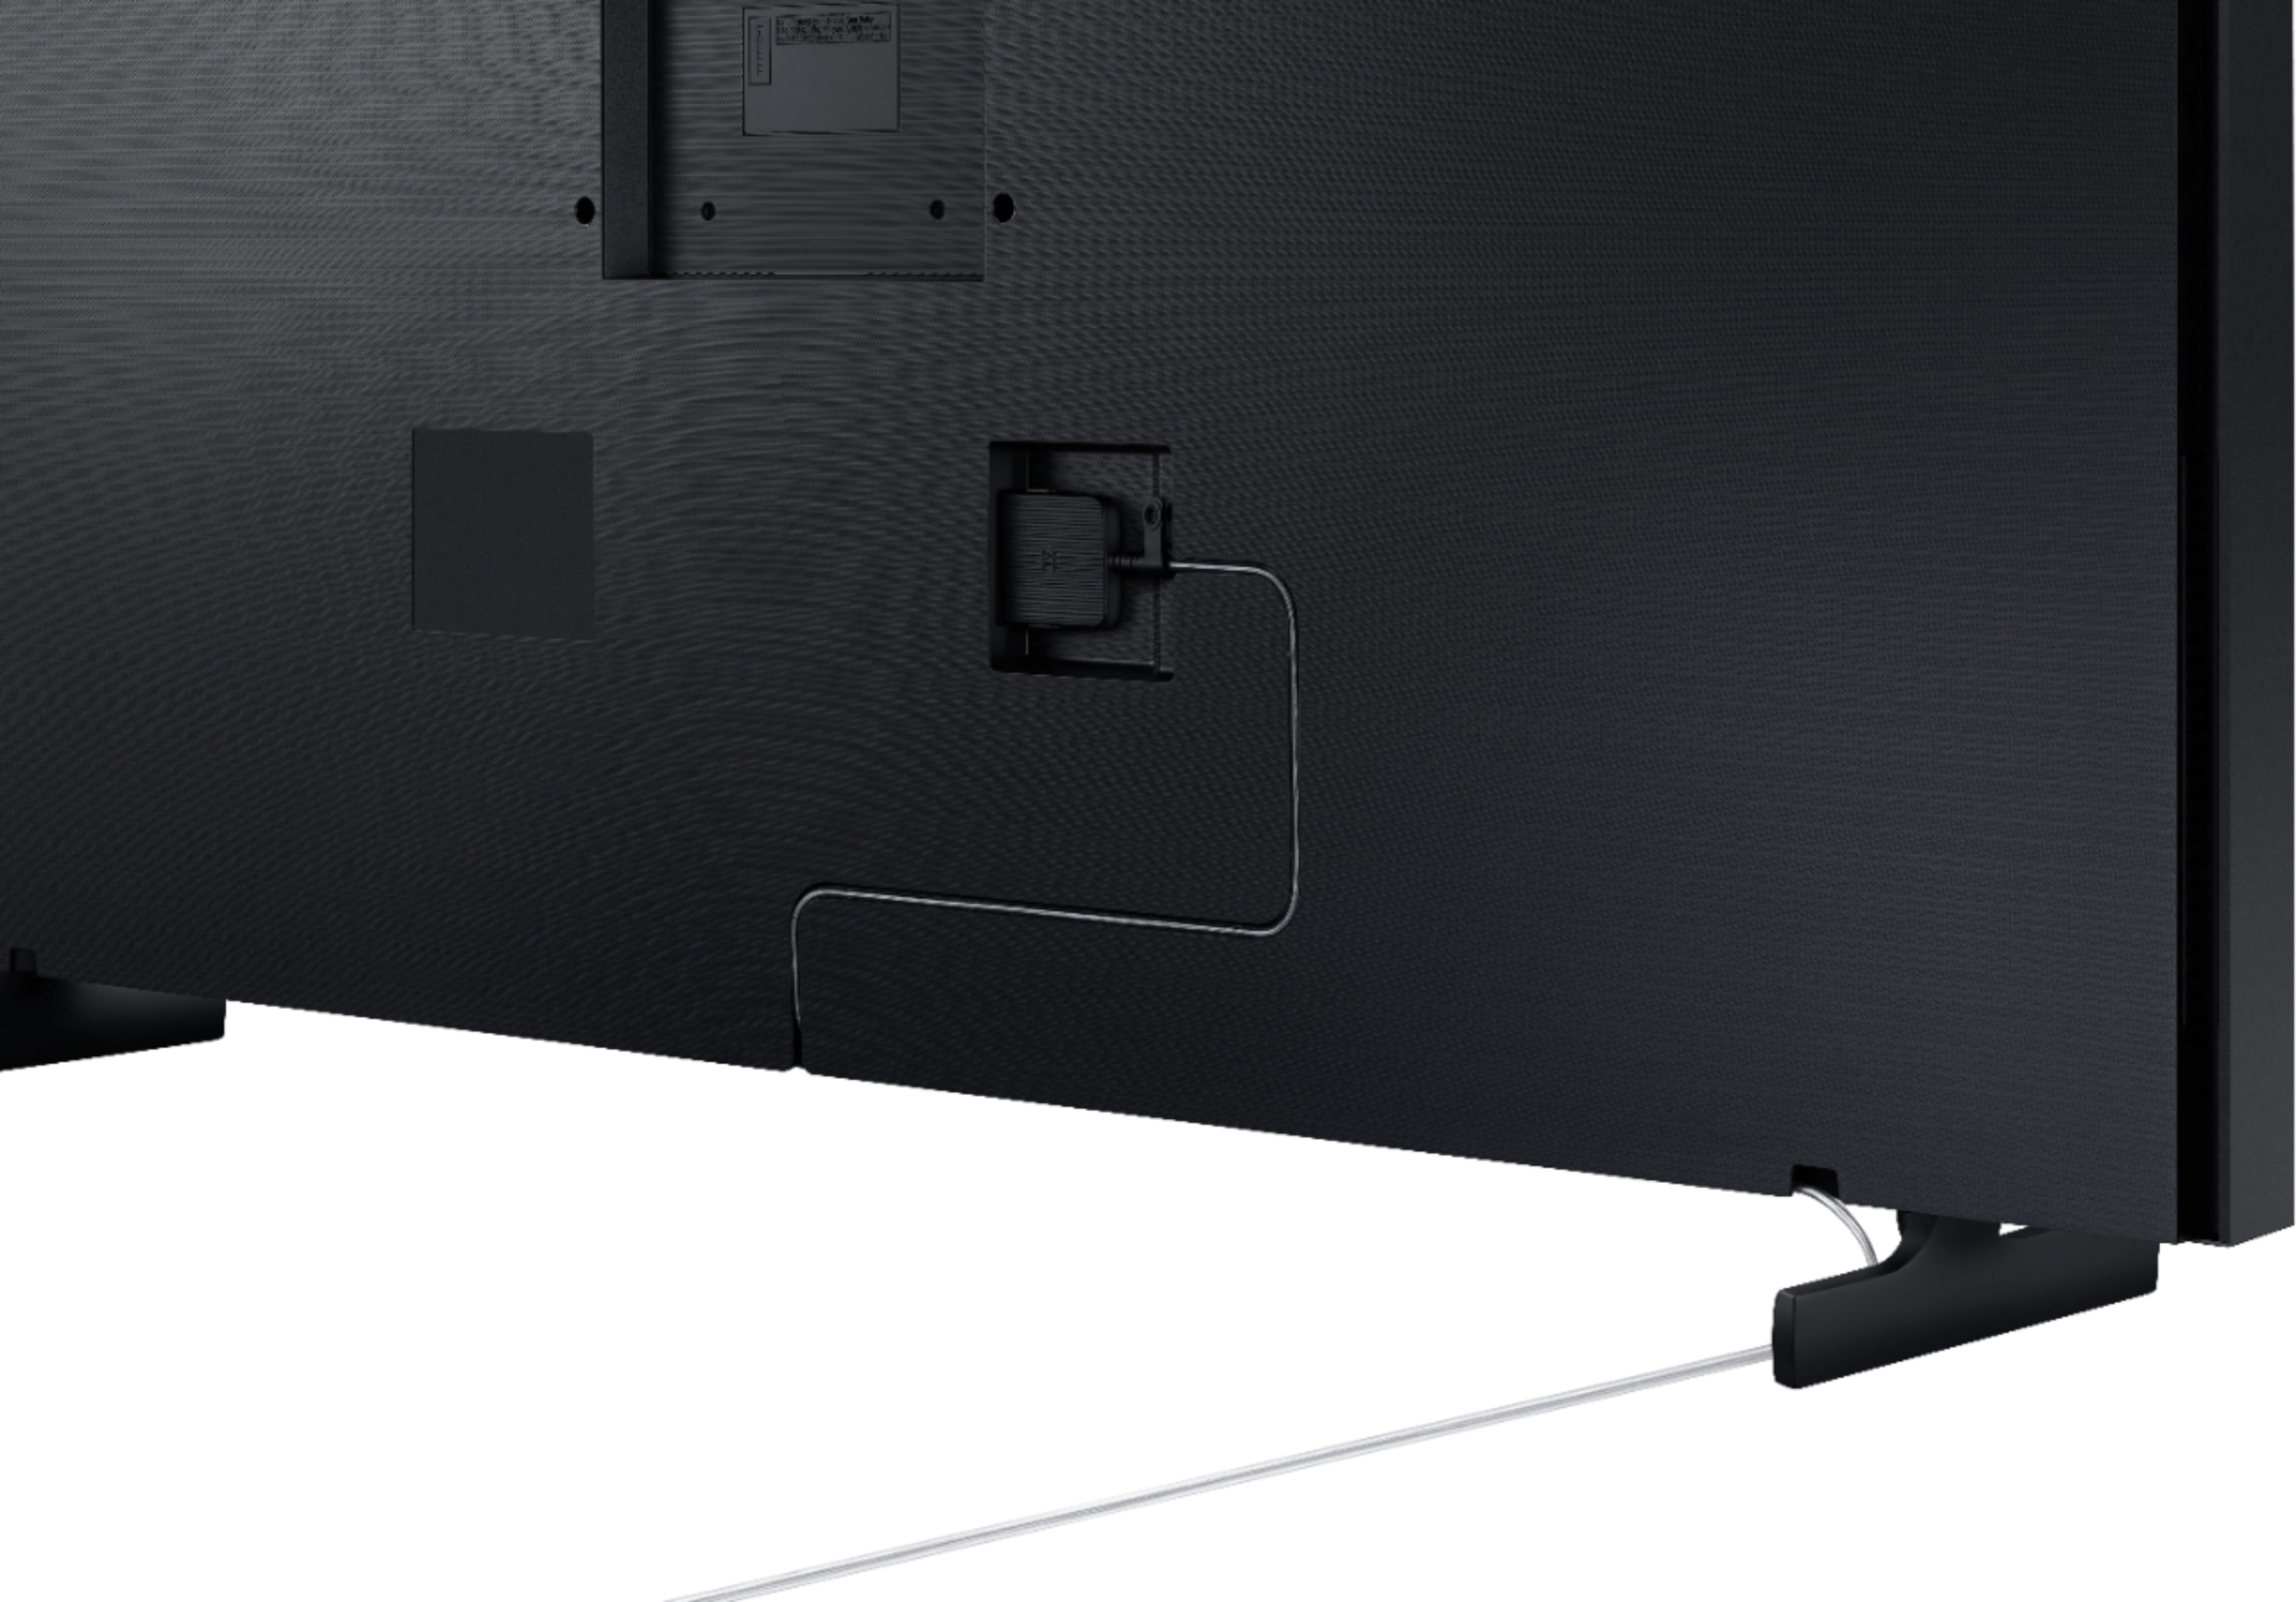 Back View: Samsung - 50" Class The Frame Series LED 4K UHD Smart Tizen TV